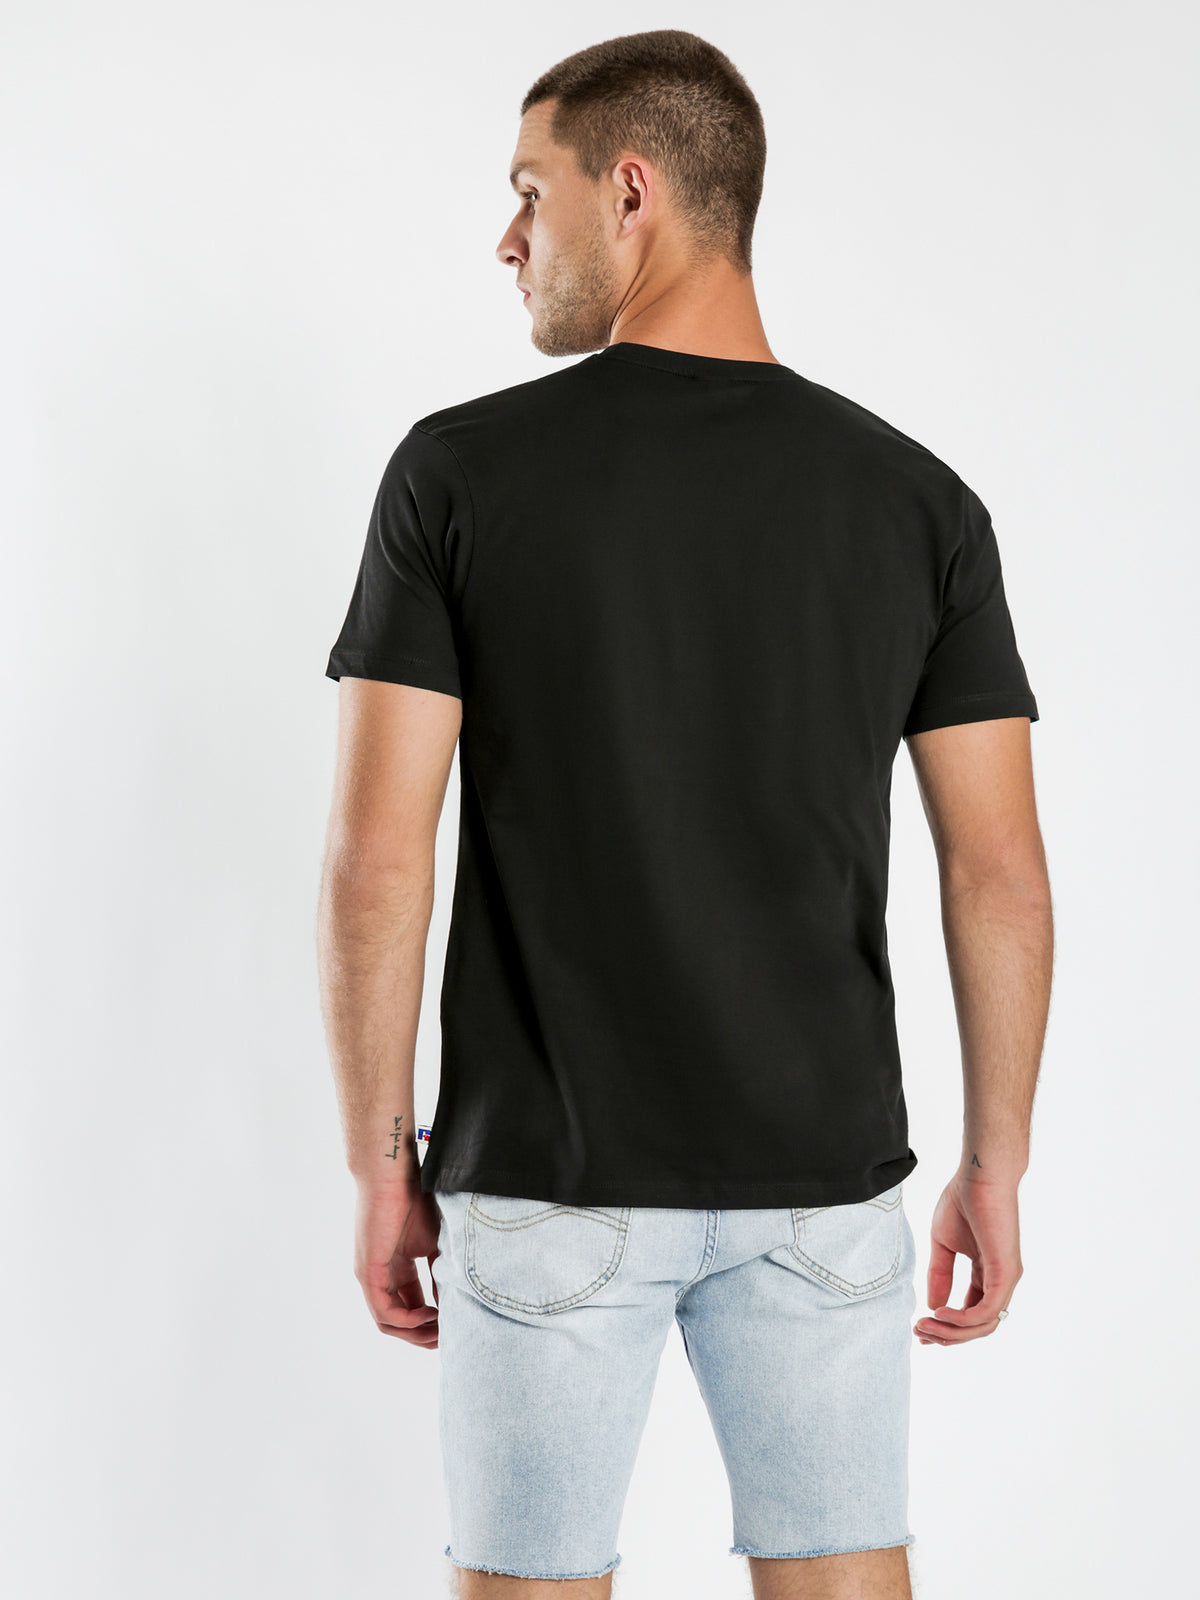 Iconic Crew Neck T-Shirt in Black